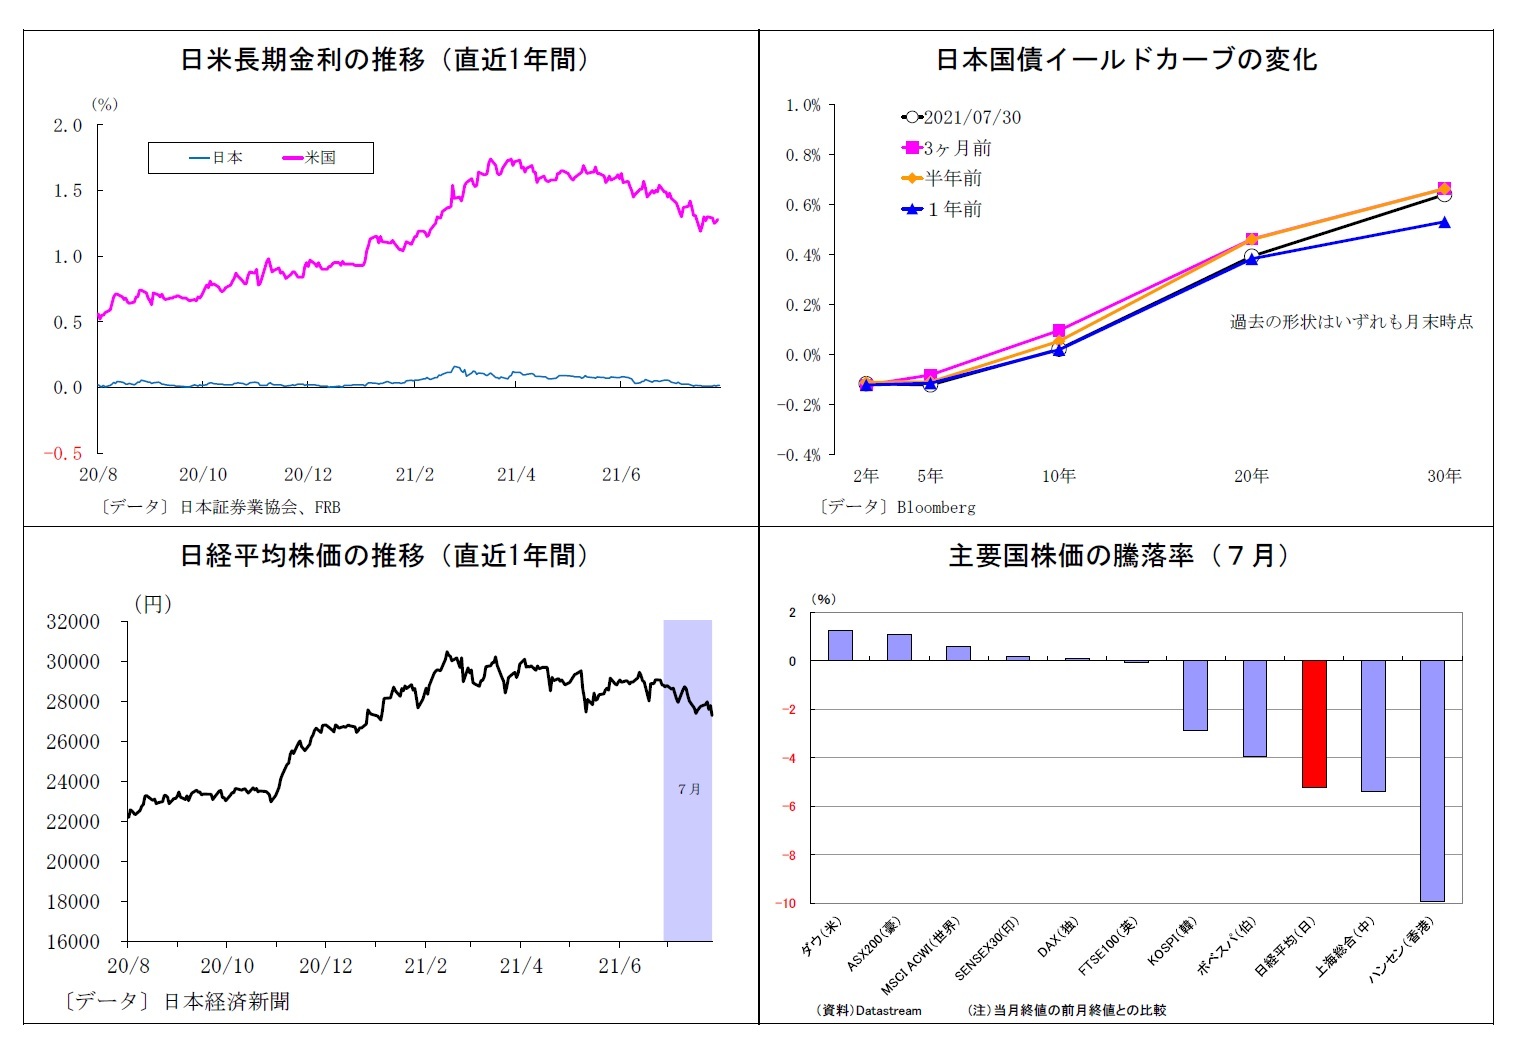 日米長期金利の推移（直近1年間）/日本国債イールドカーブの変化/日経平均株価の推移（直近1年間）/主要国株価の騰落率（７月）